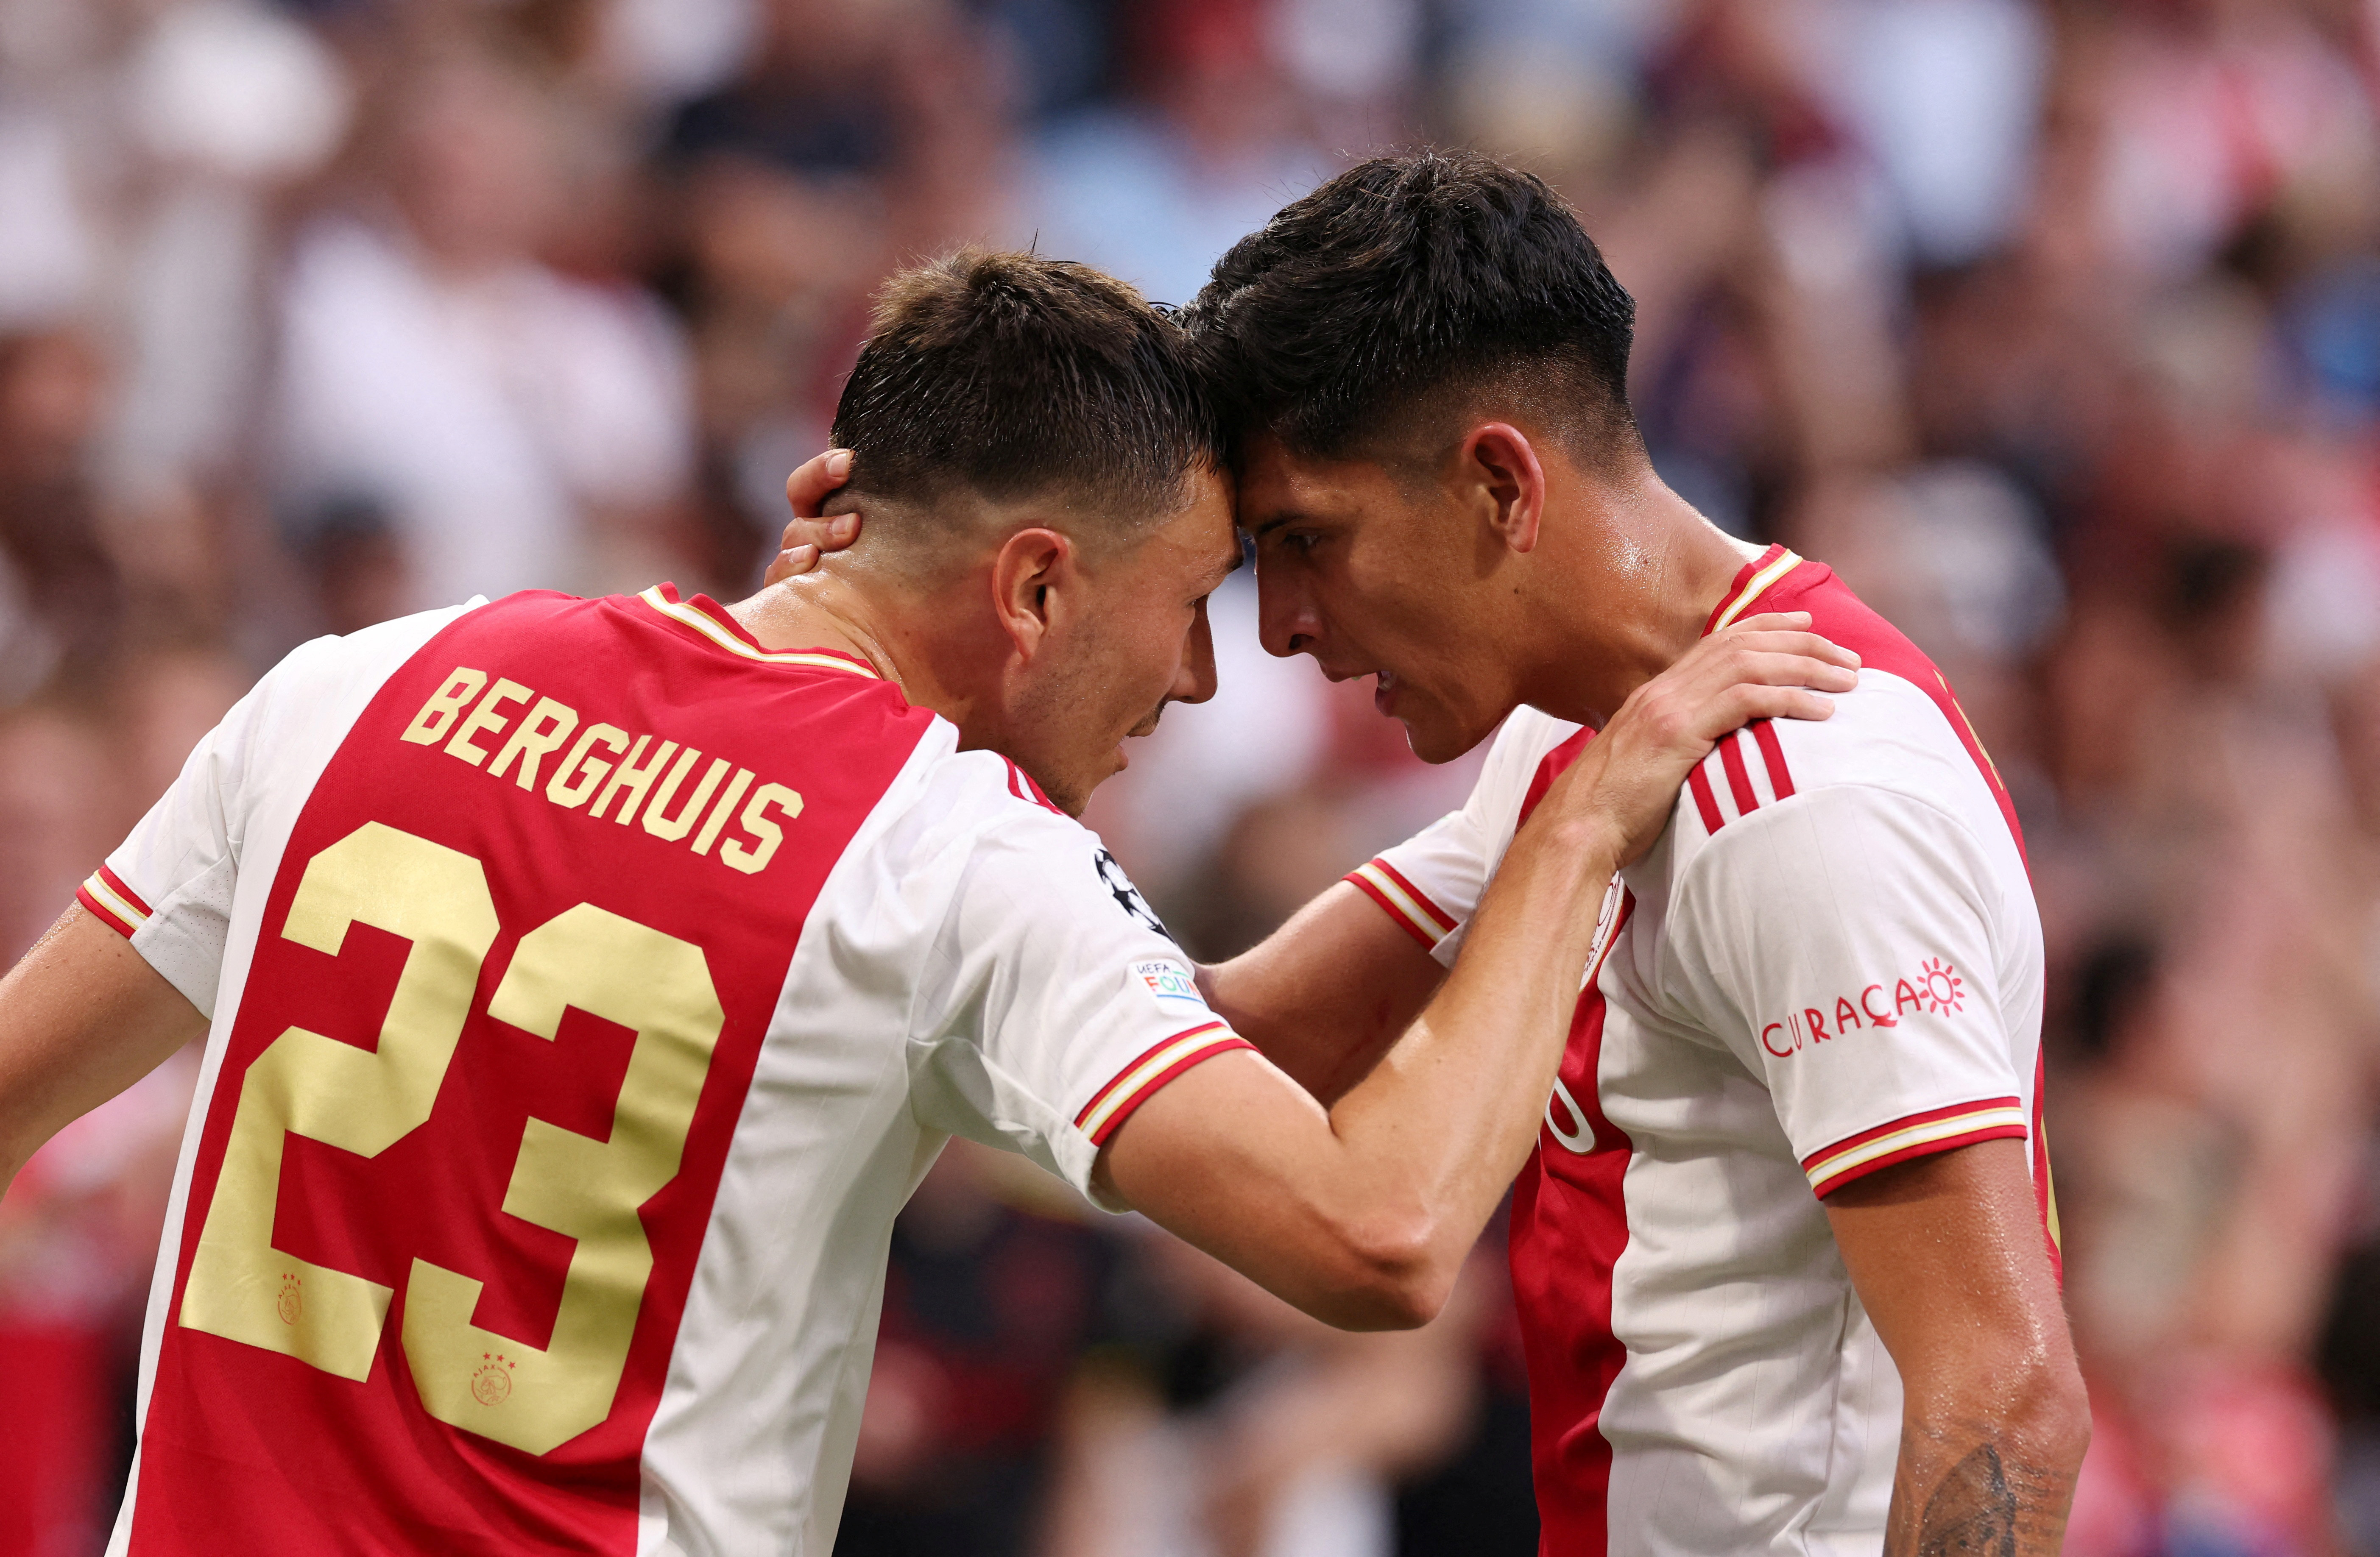 Ajax shine in Champions League despite high-profile departures